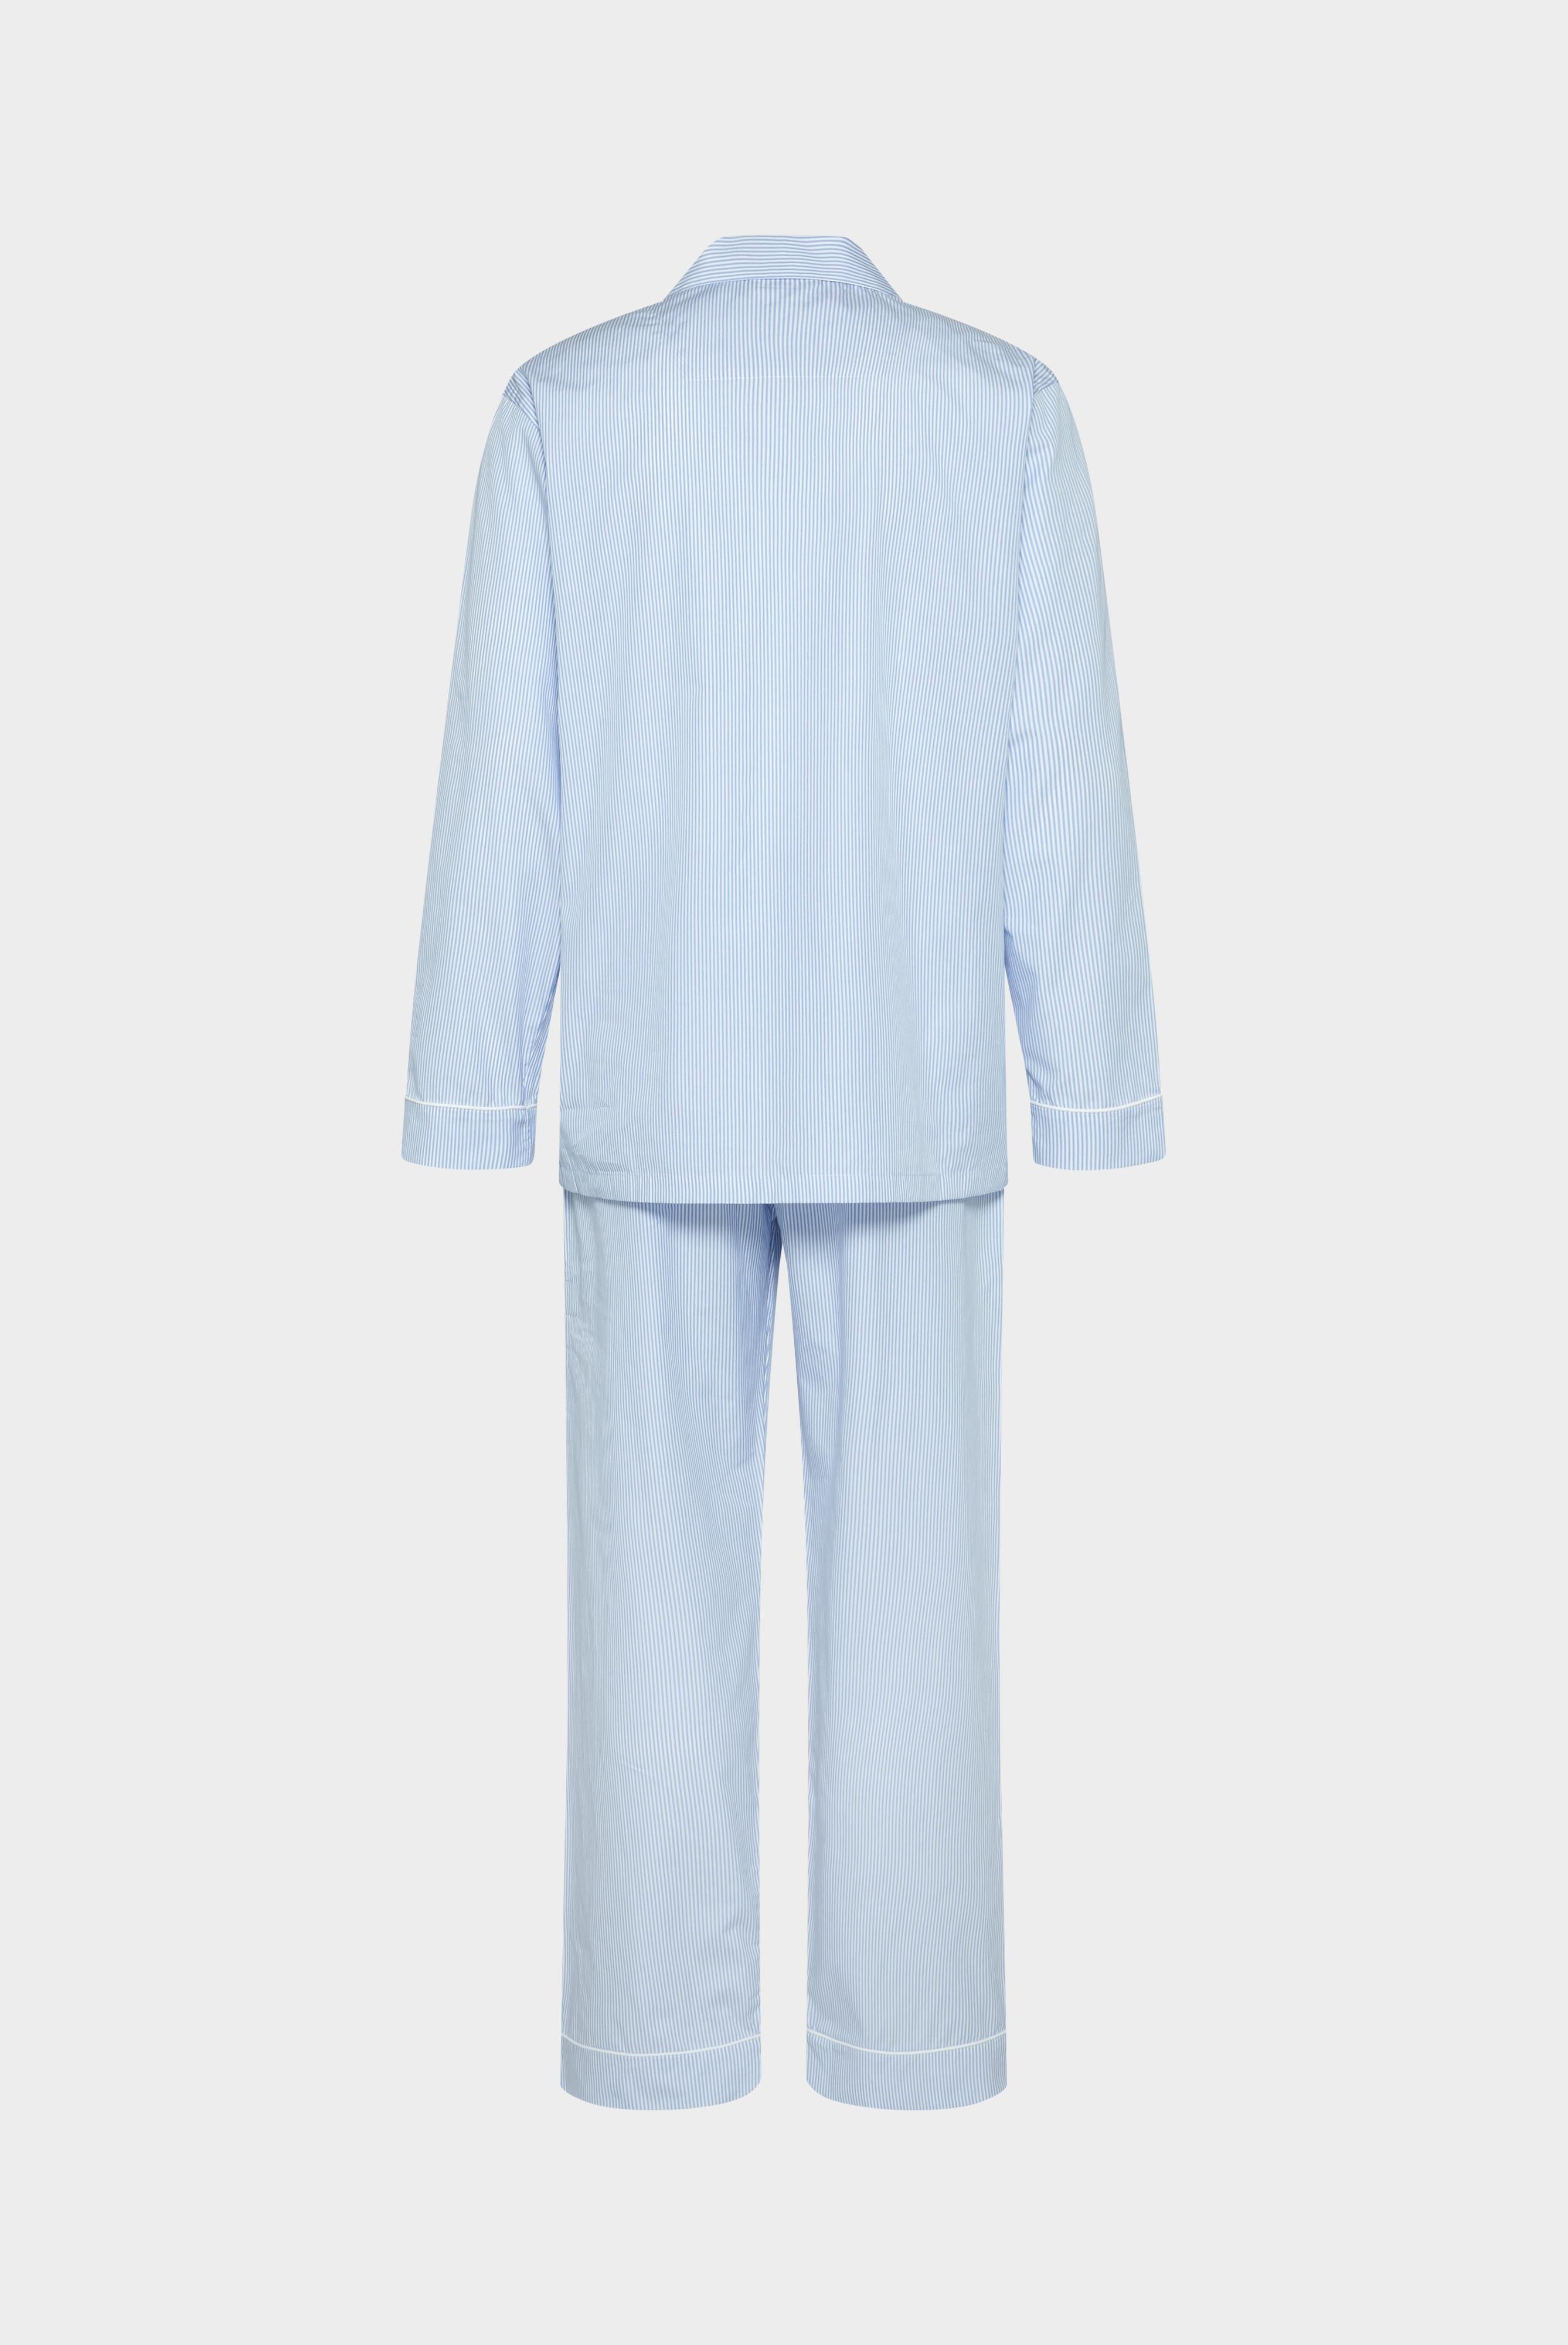 Pyjamas+Schlafanzug aus Popeline Gestreift+91.1139.UK.141786.720.46